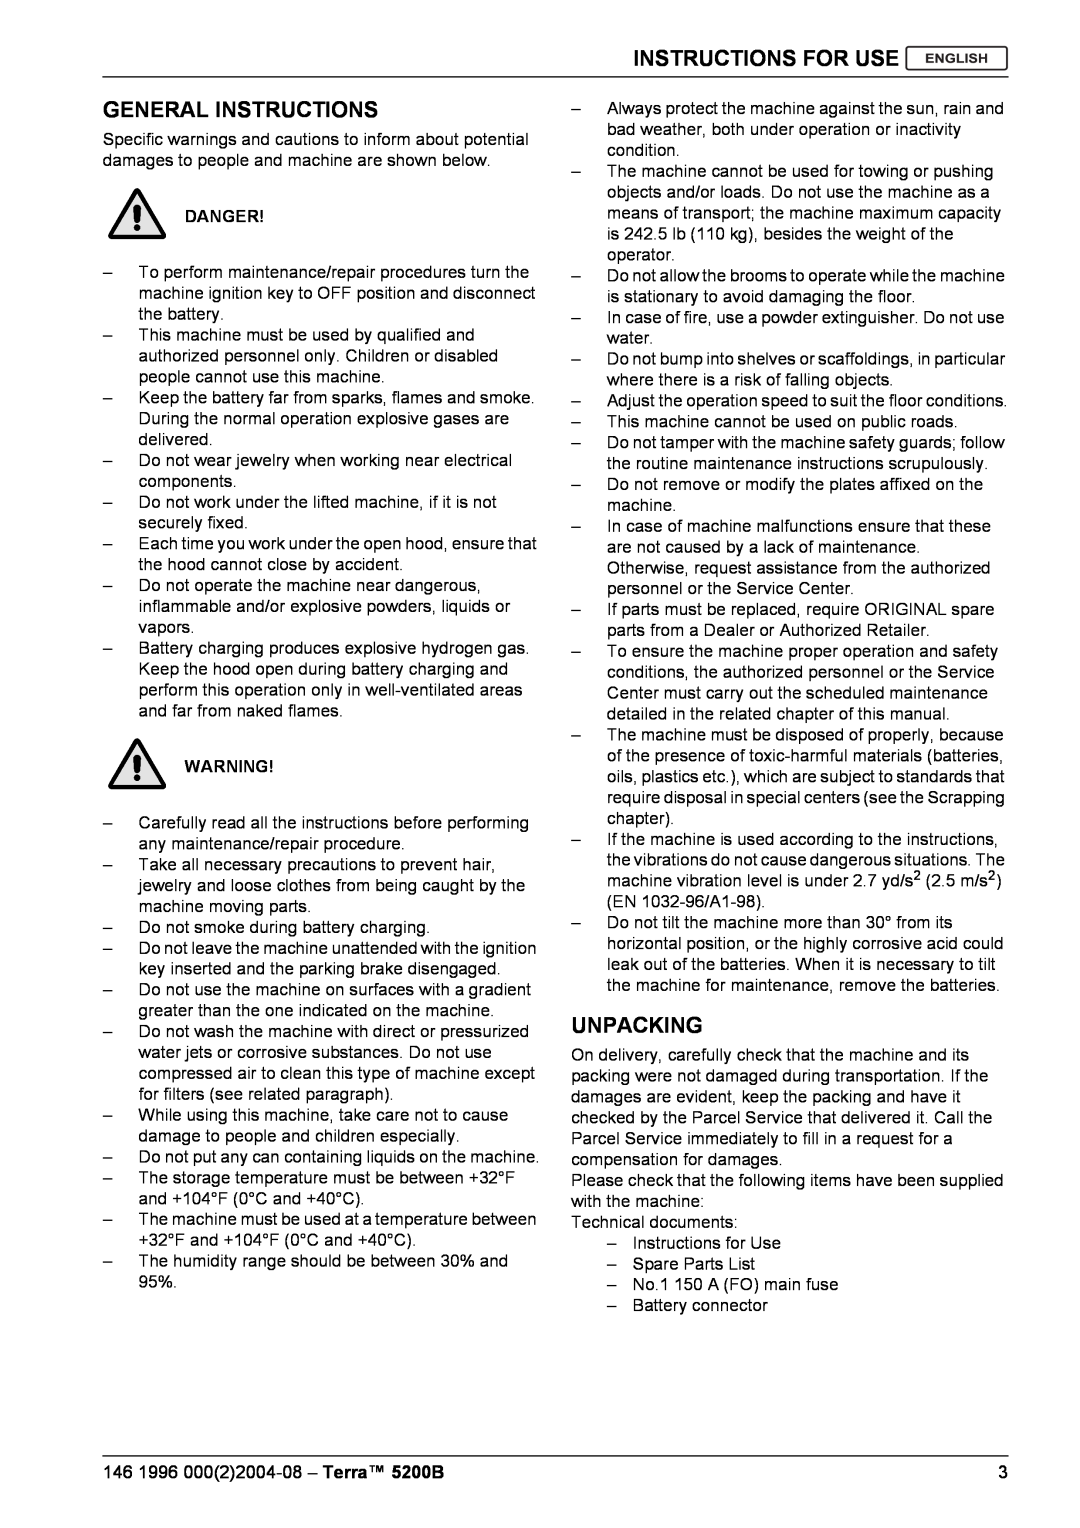 Nilfisk-Advance America 5200B manual General Instructions, Unpacking, Instructions For Use, Danger 